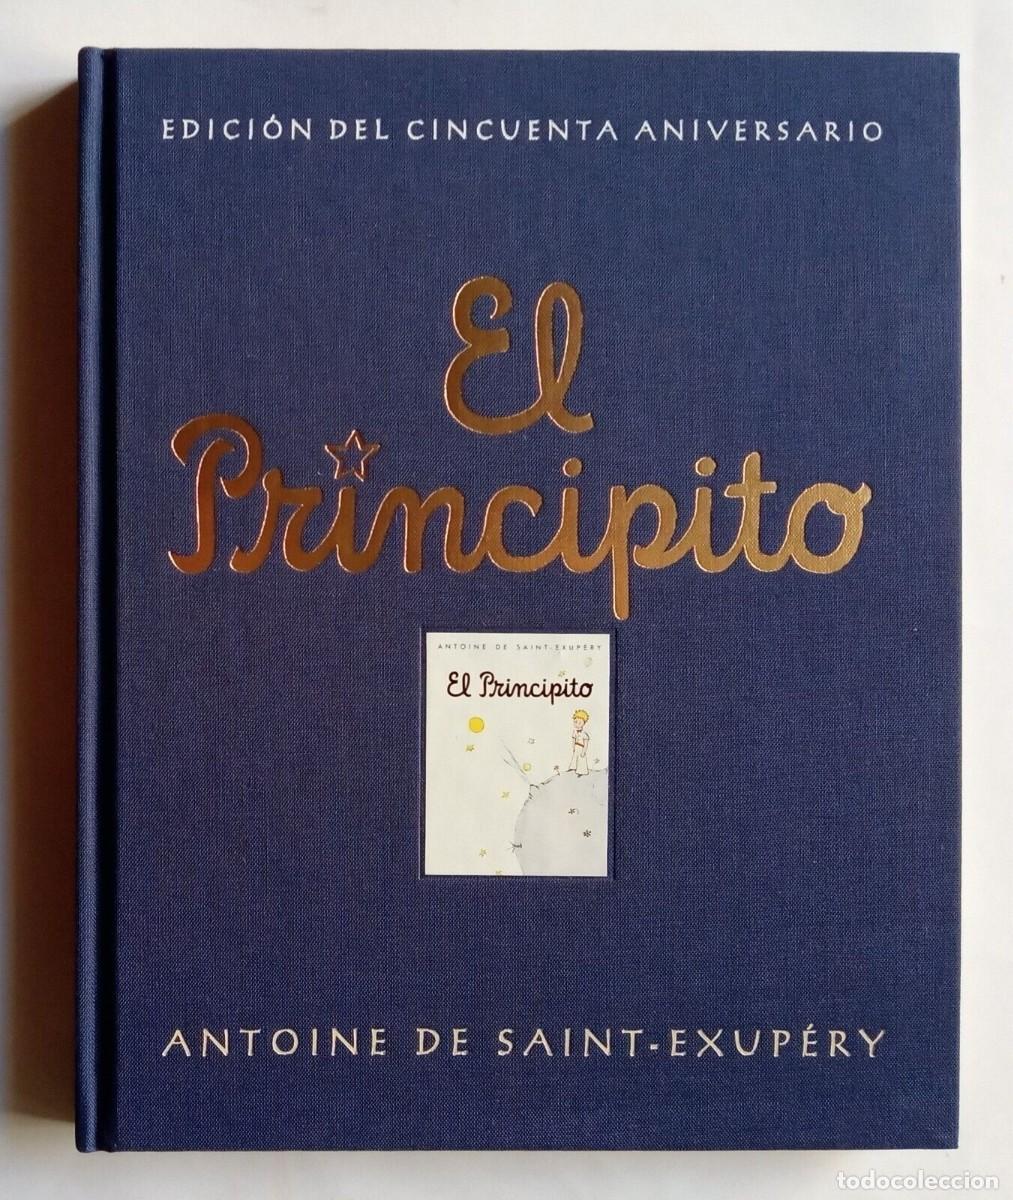 El Principito : Saint-exupery, Antoine De, Carril, Bonifacio Del:  : Books